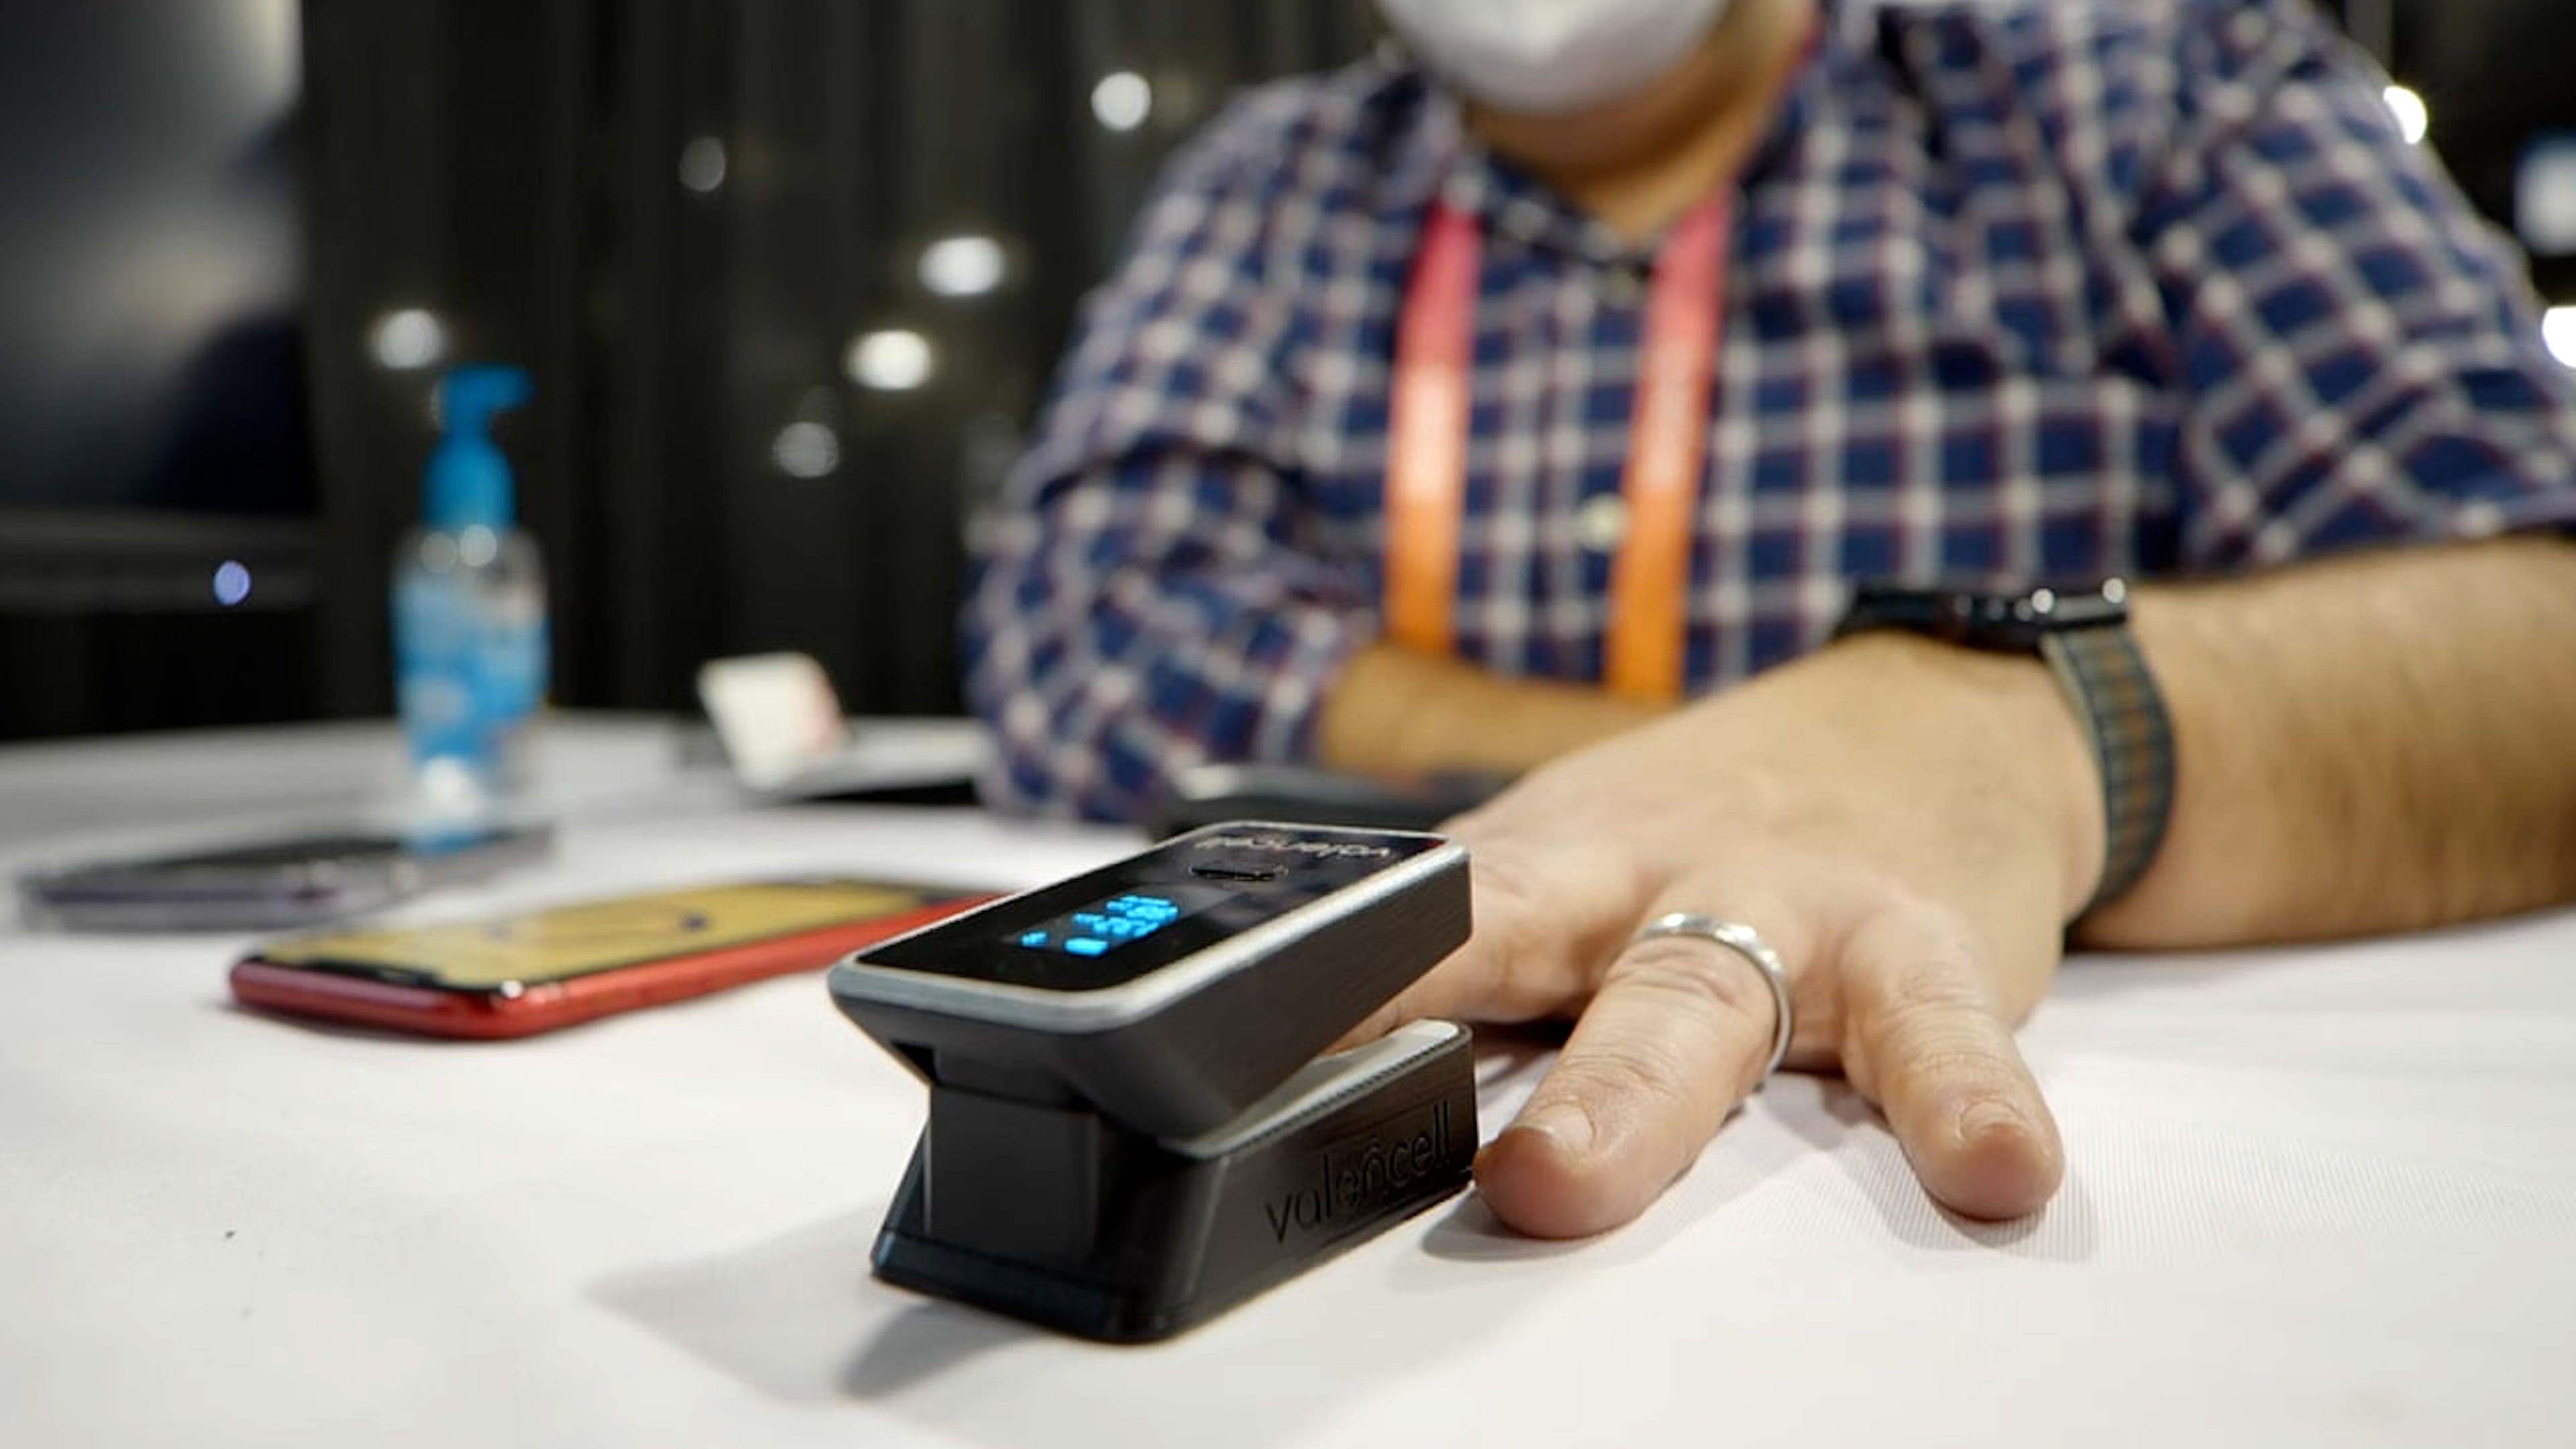 Automatic Wireless Wrist Blood Pressure Monitor (W/ Voice)